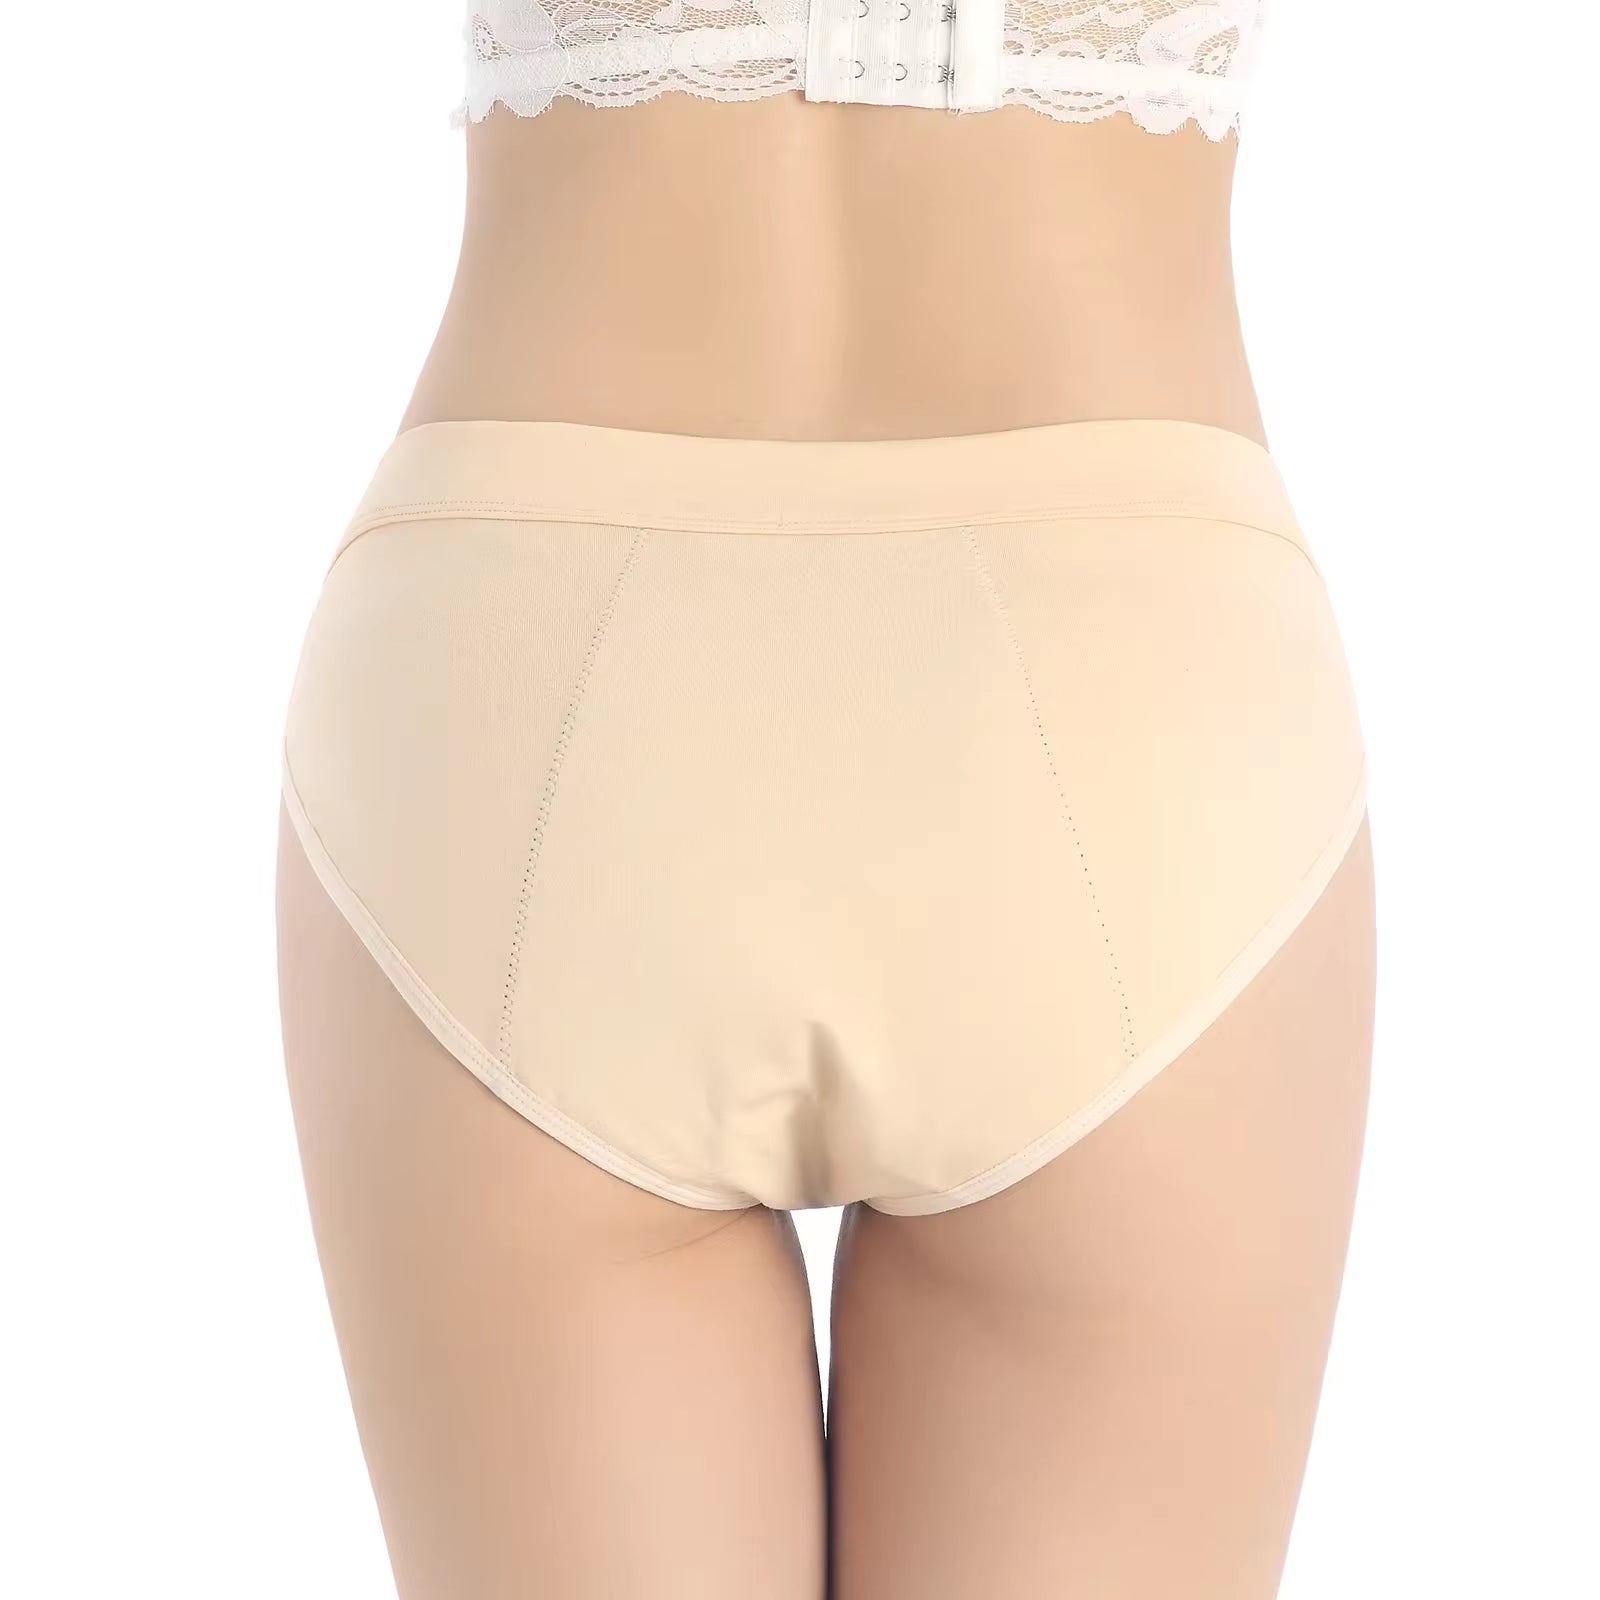 Panties for Women Bikini Underwear Women'S Cotton High Leg Brief Underwear Postpartum Ladies Panties Briefs Breathable Panties